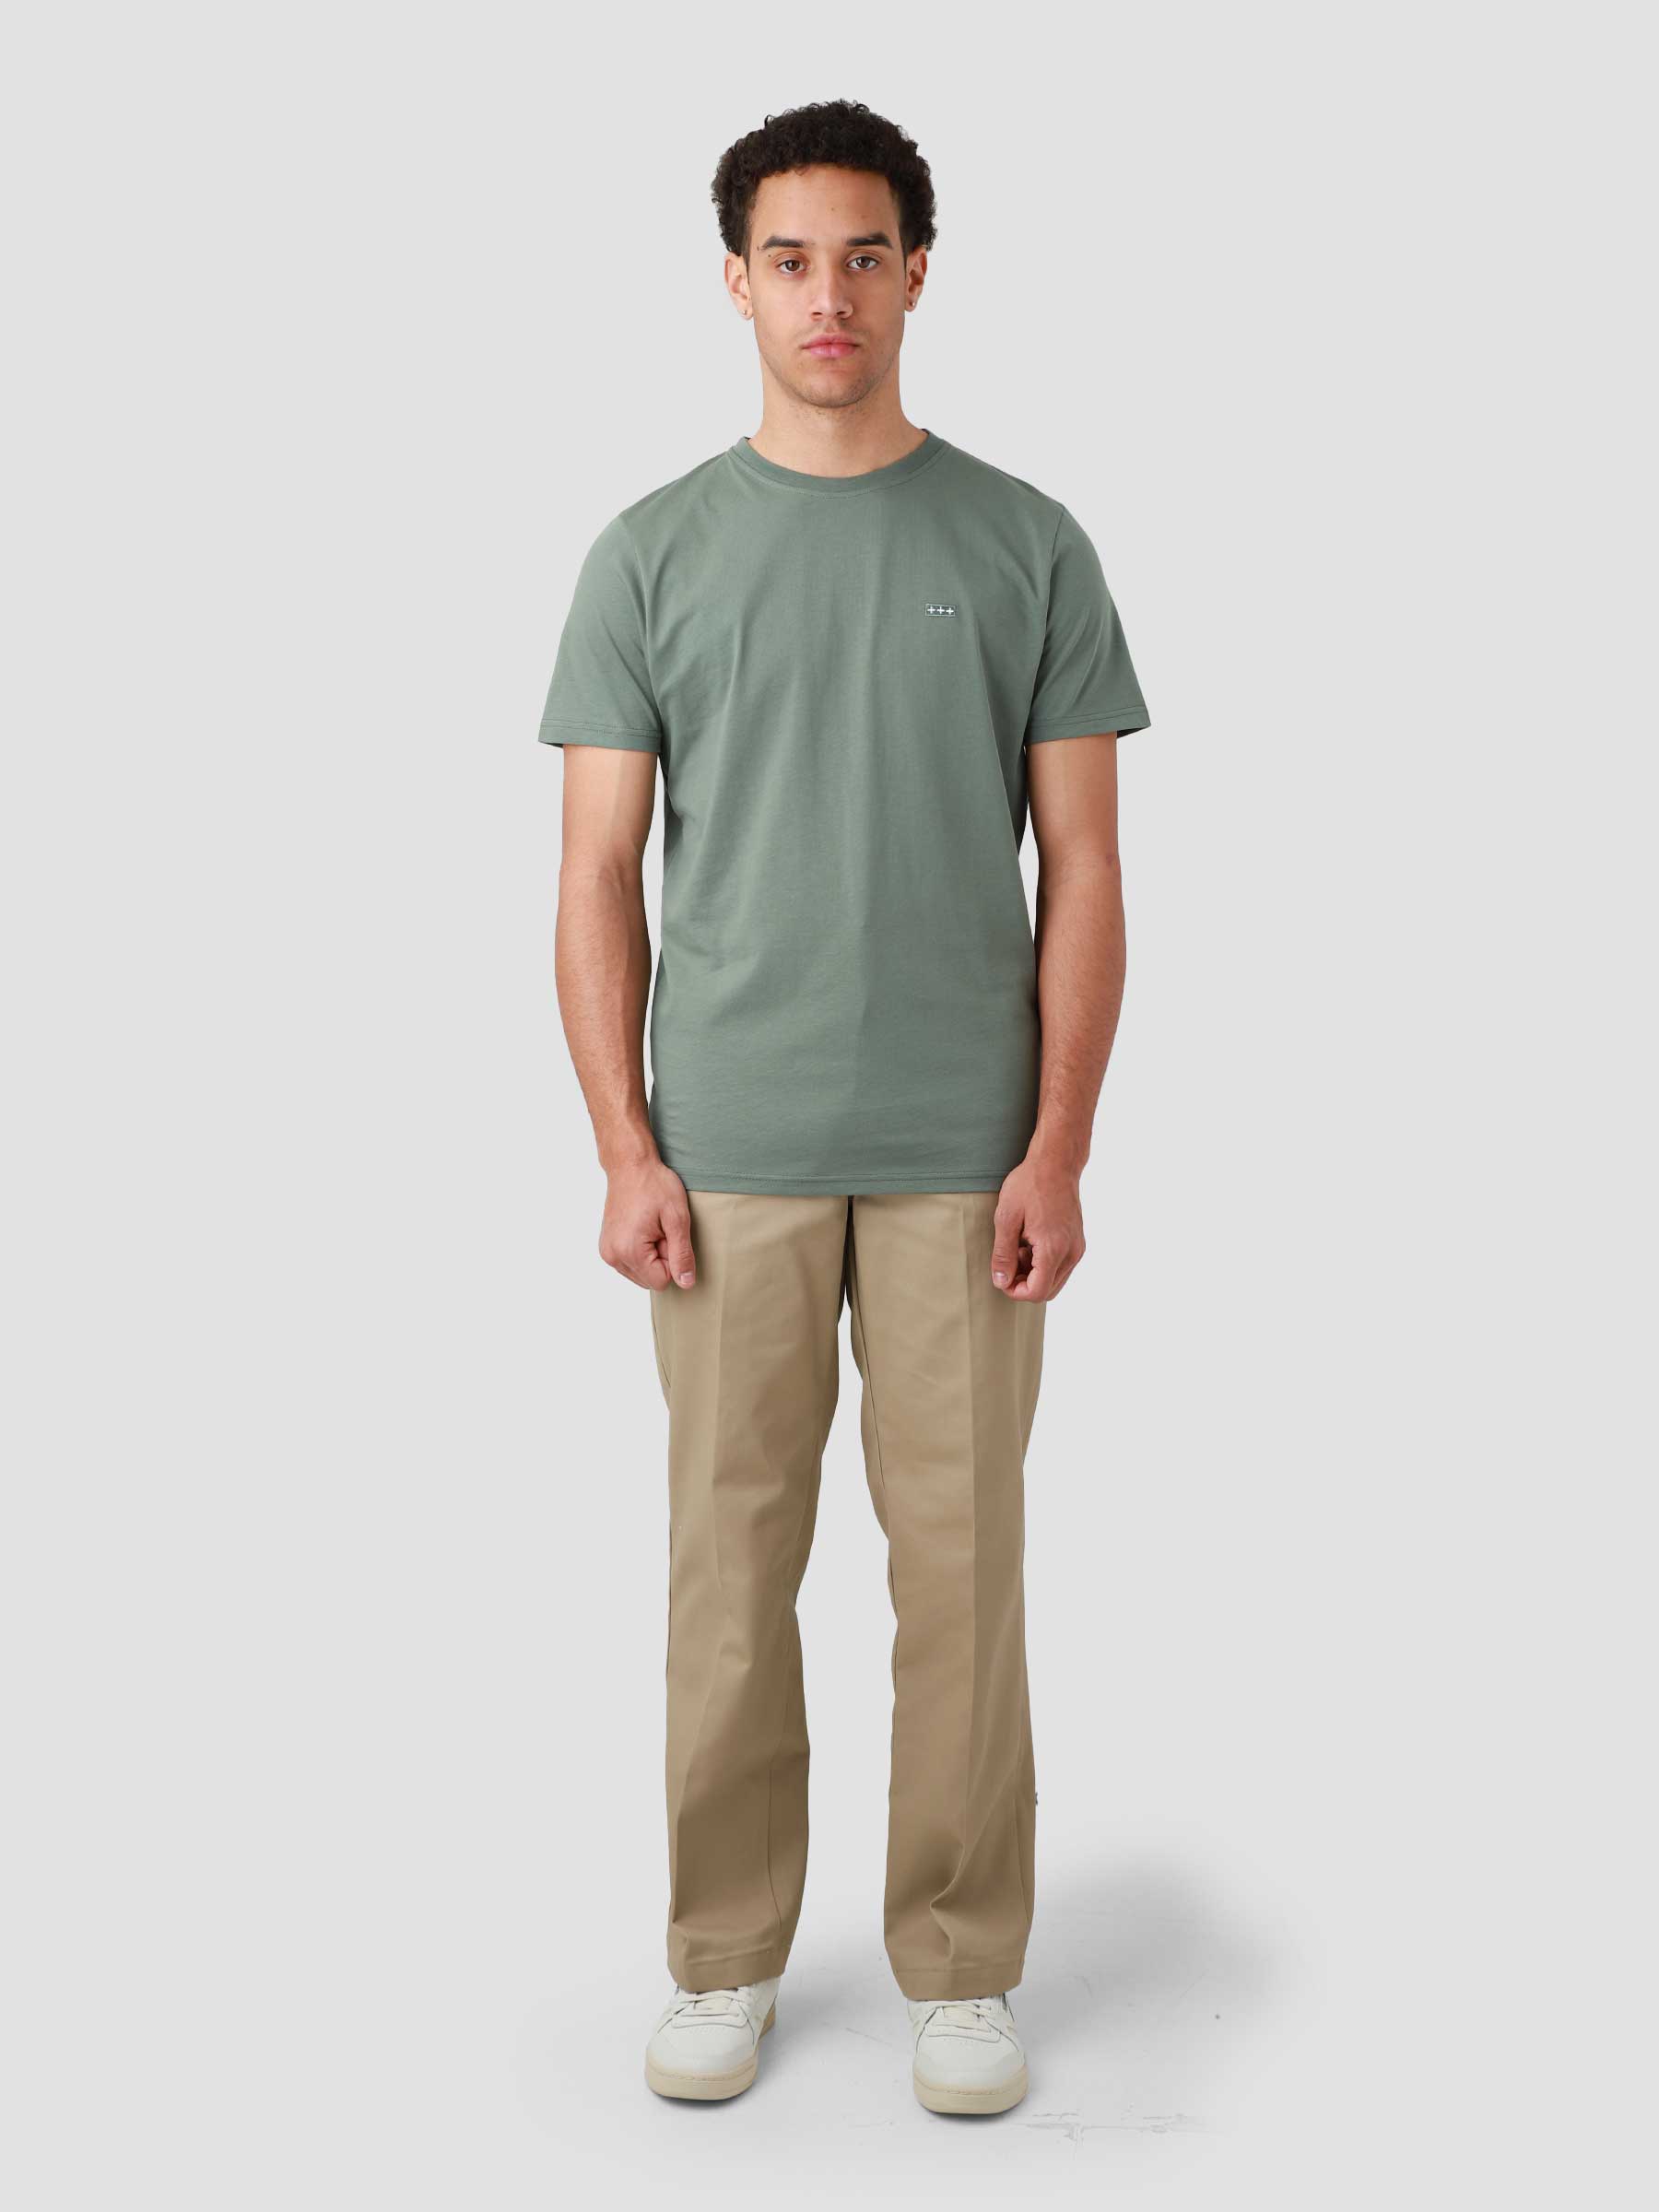 QB03 Patch Logo T-shirt Olive Green